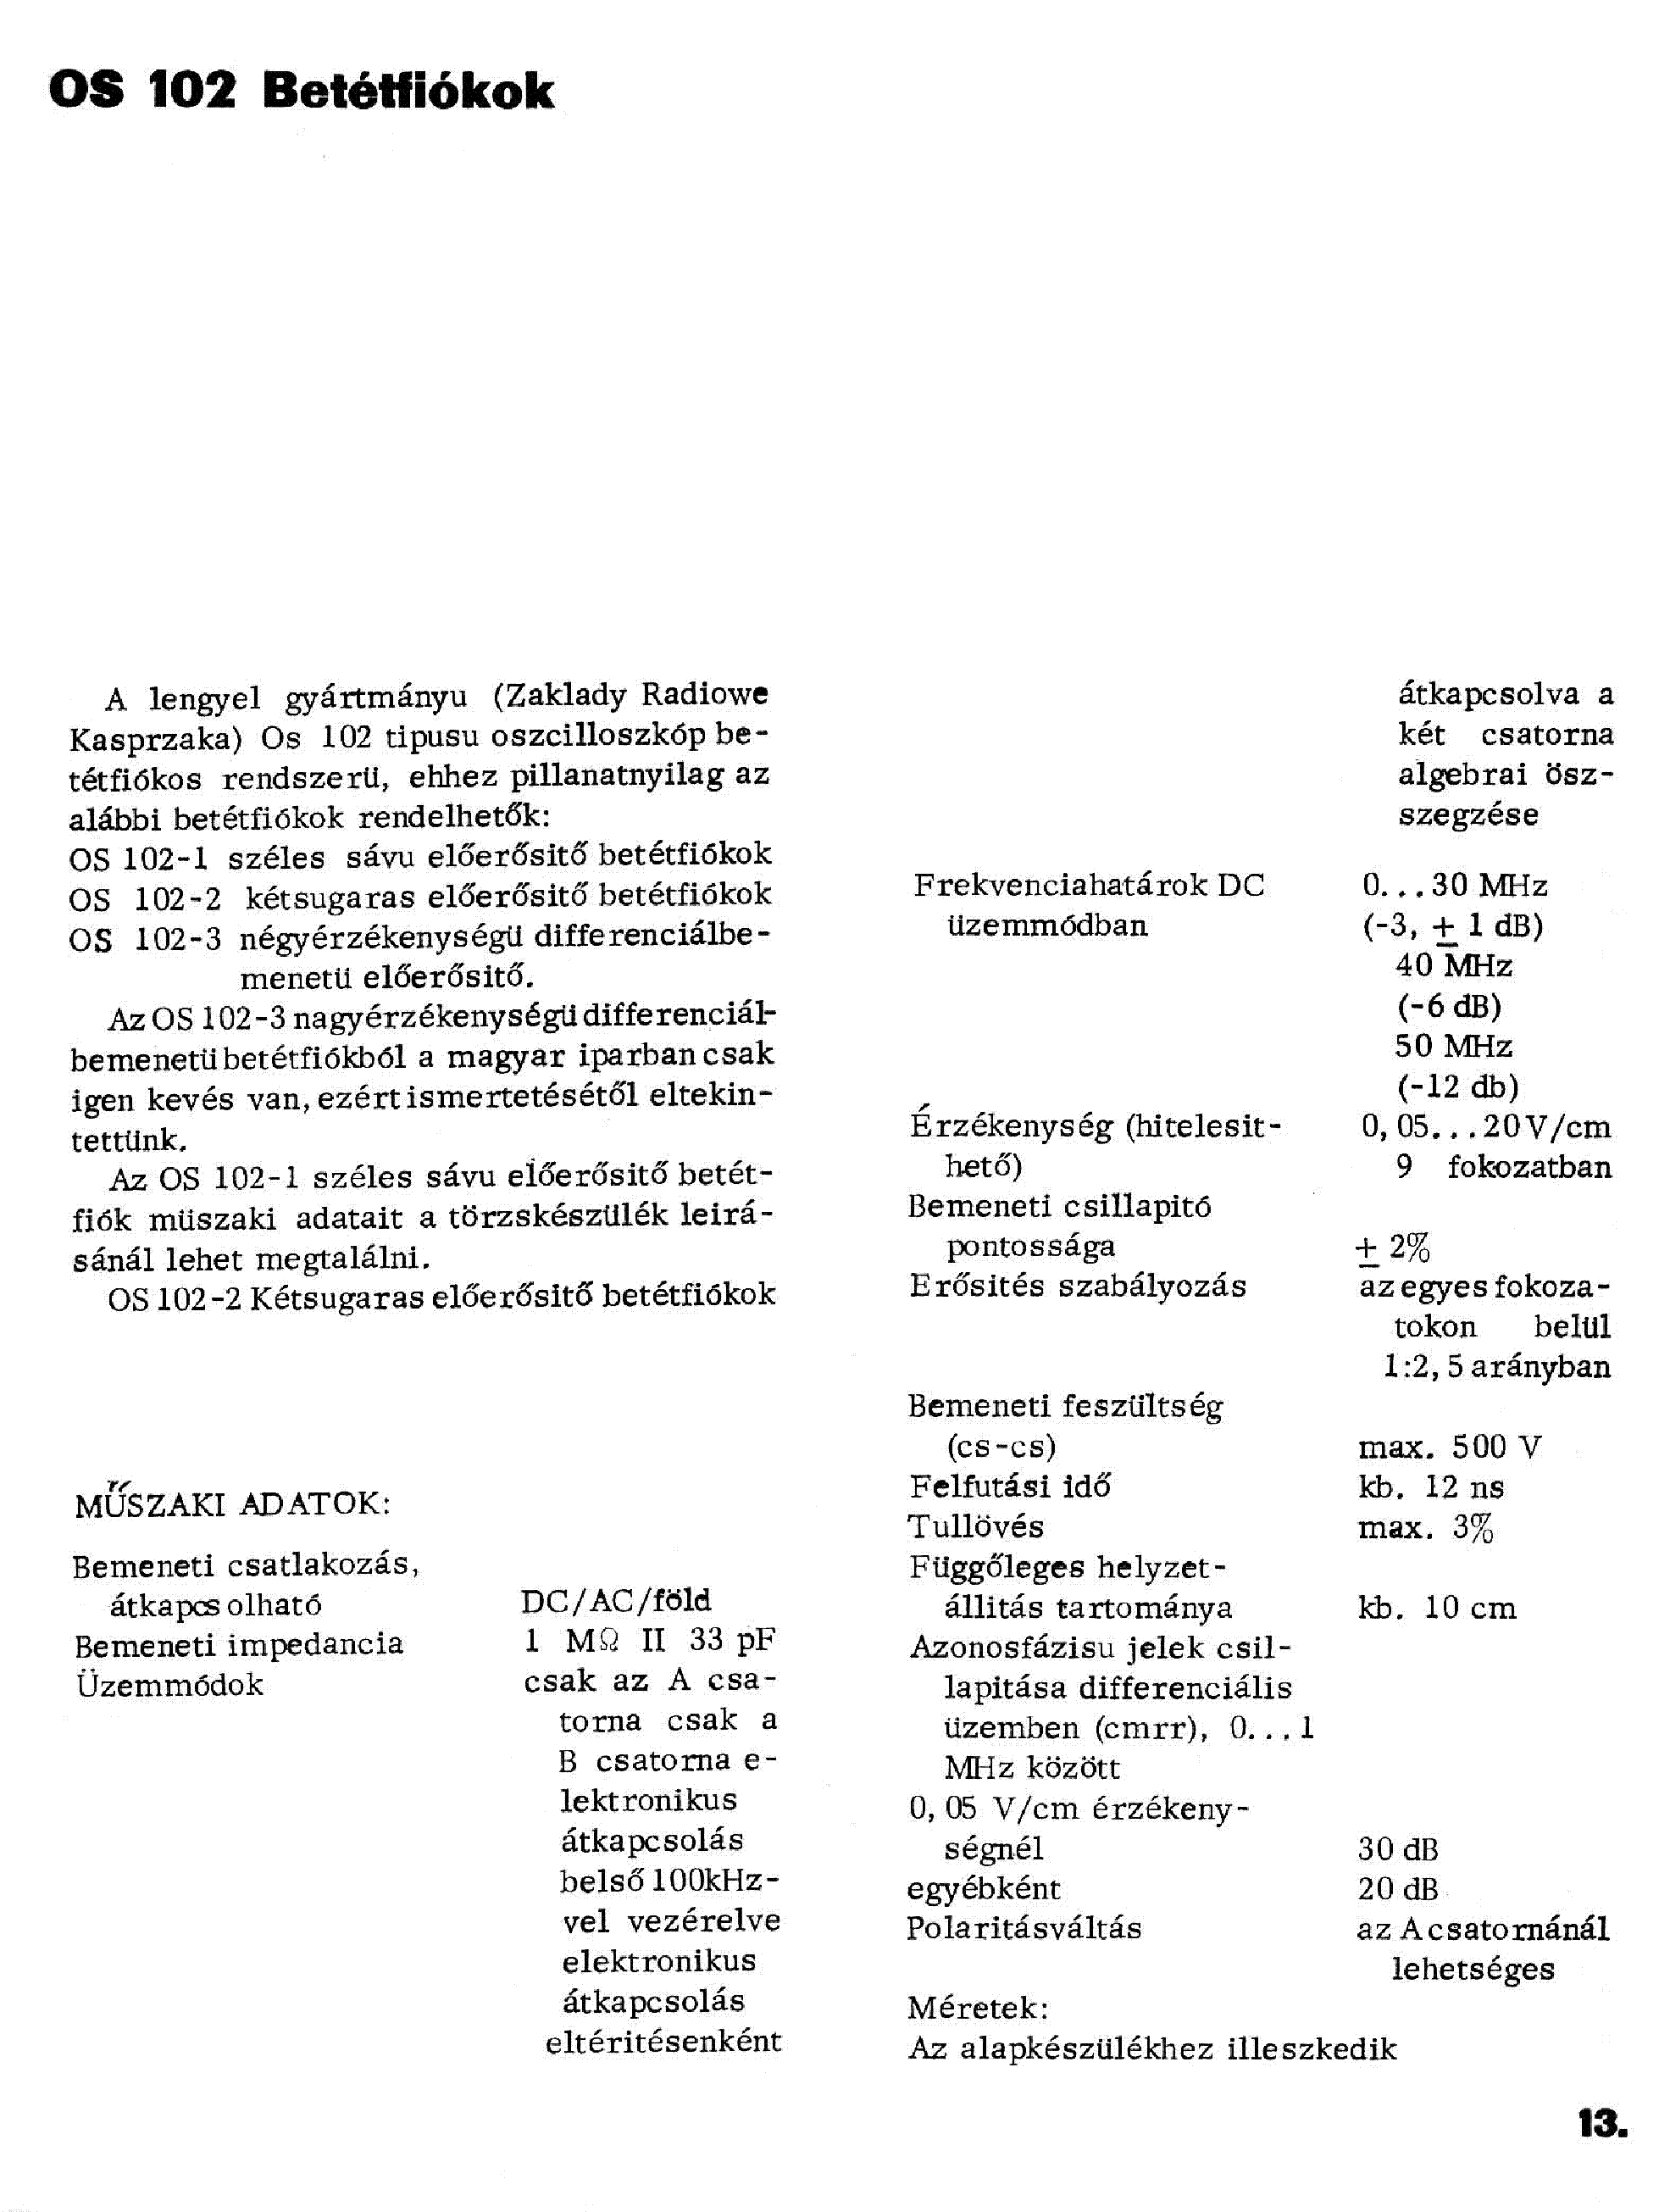 ZRK OS-102 BETETFIOKOK service manual (1st page)